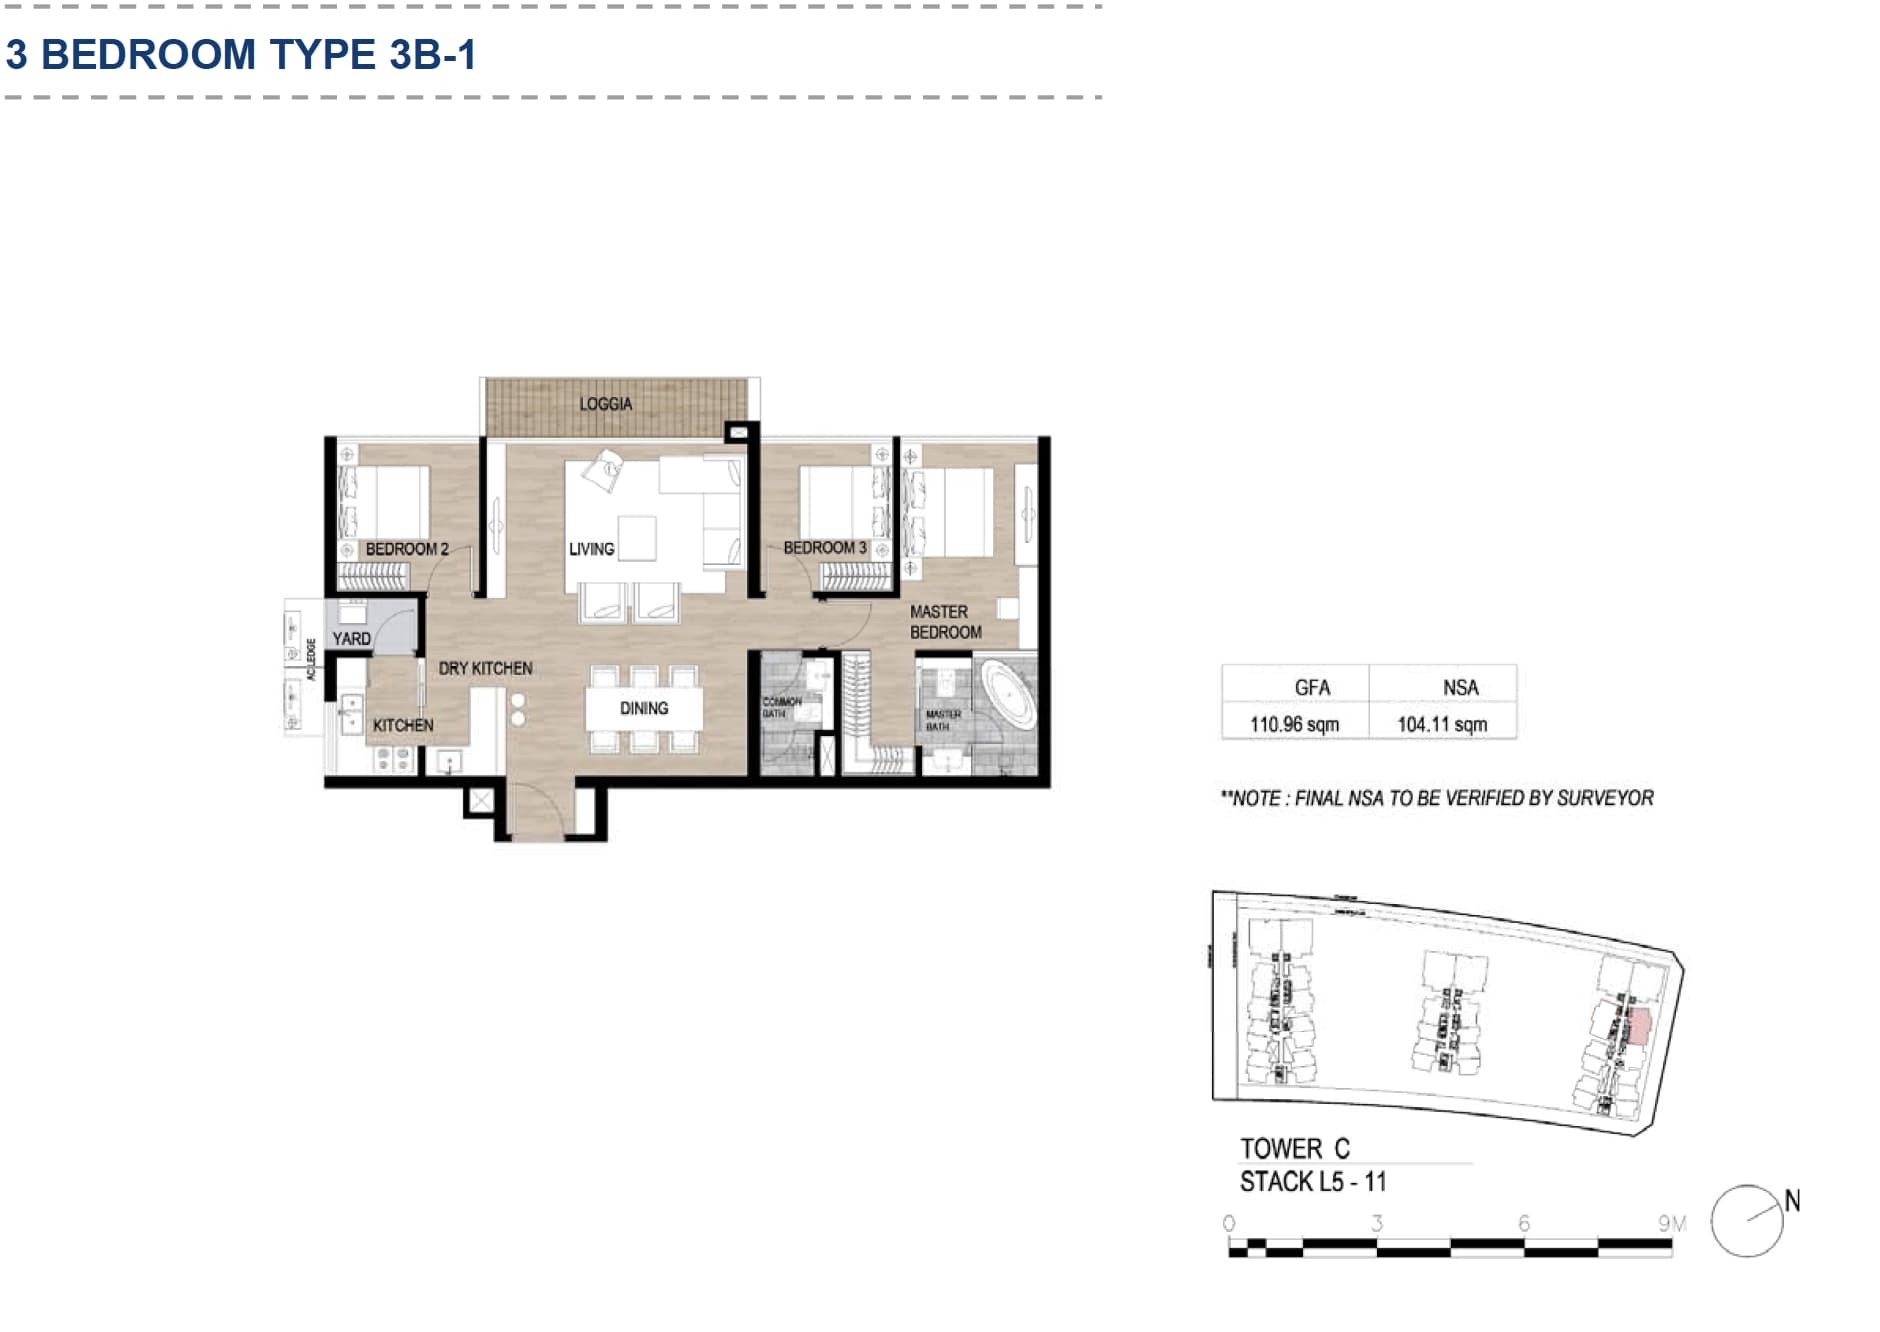 Floor plan of 3-bedroom apartment in Metropole Thu Thiem 1